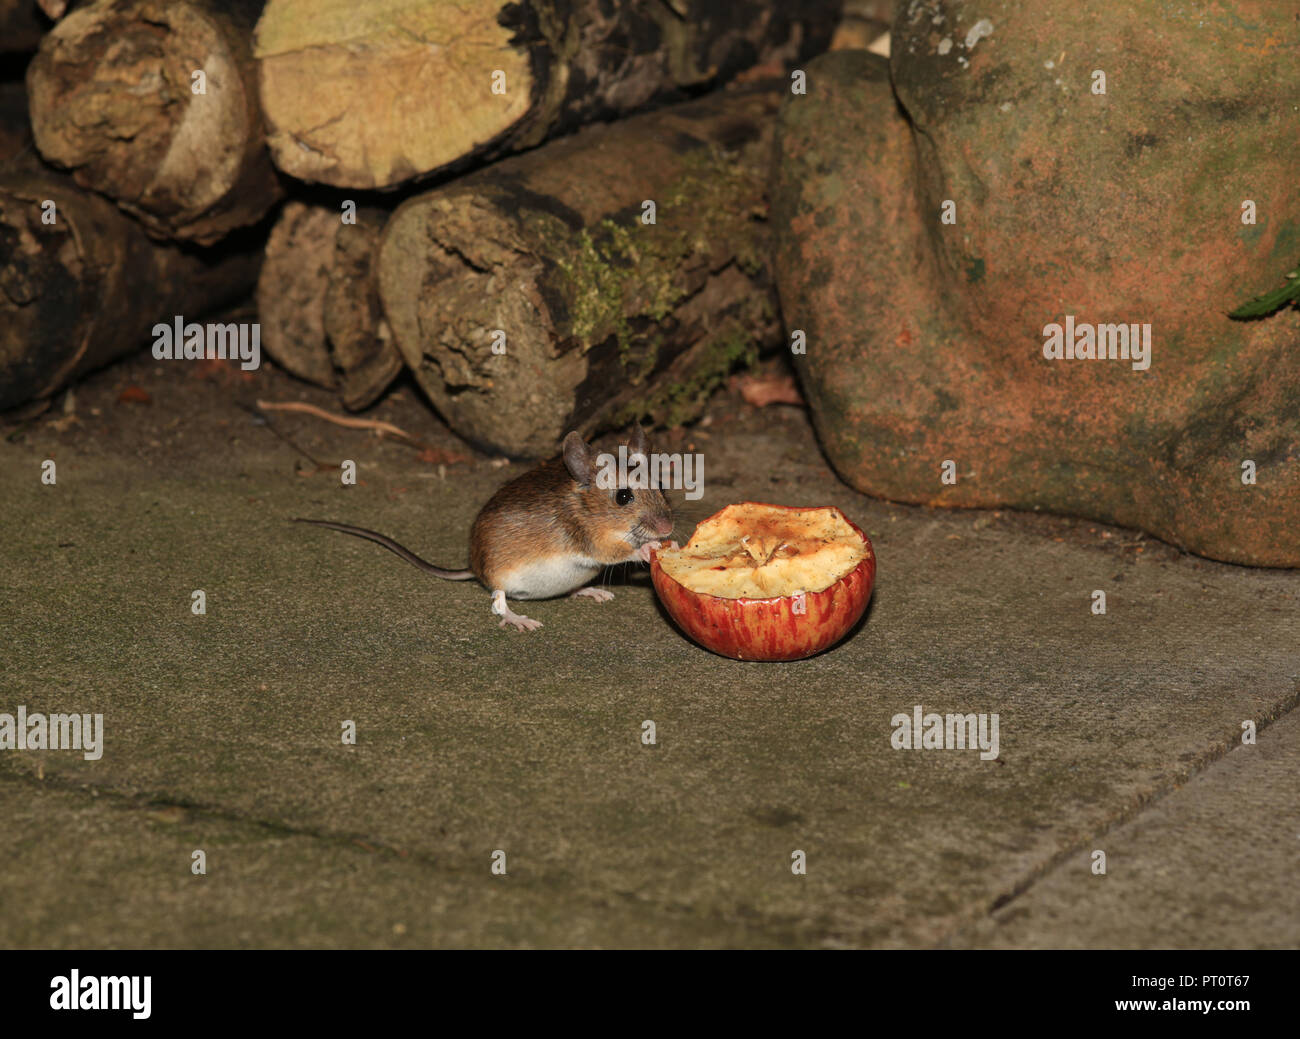 Young Wood Mouse (Apodemus Sylvaticus) feeding on half an apple in a UK garden. Stock Photo